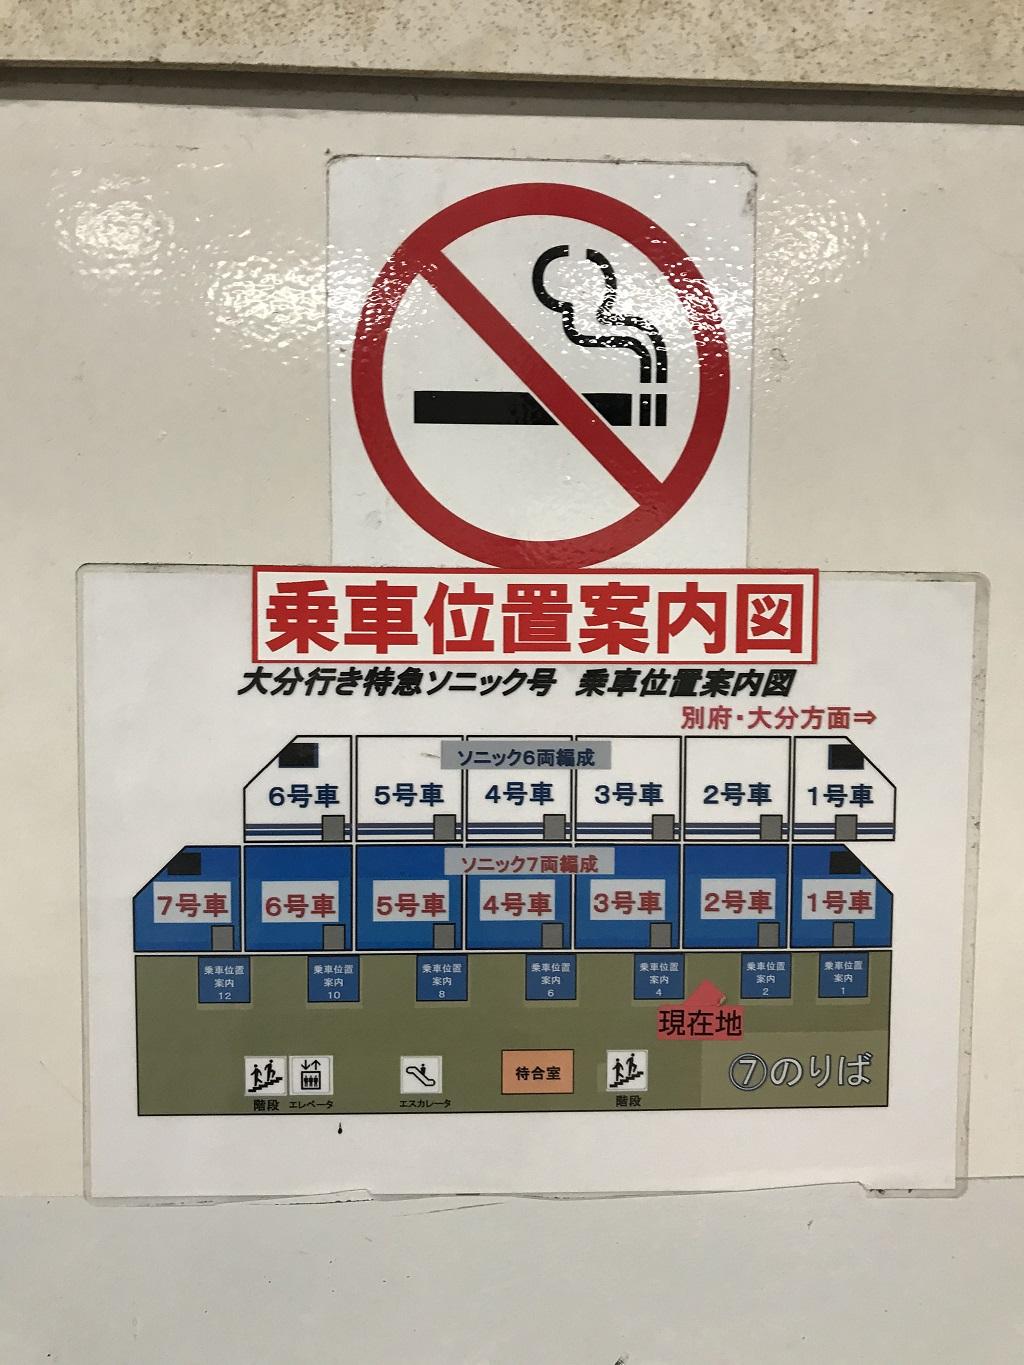 JR小倉駅7番ホームの柱に掲示されている大分行き特急ソニック号の「乗車位置案内図」